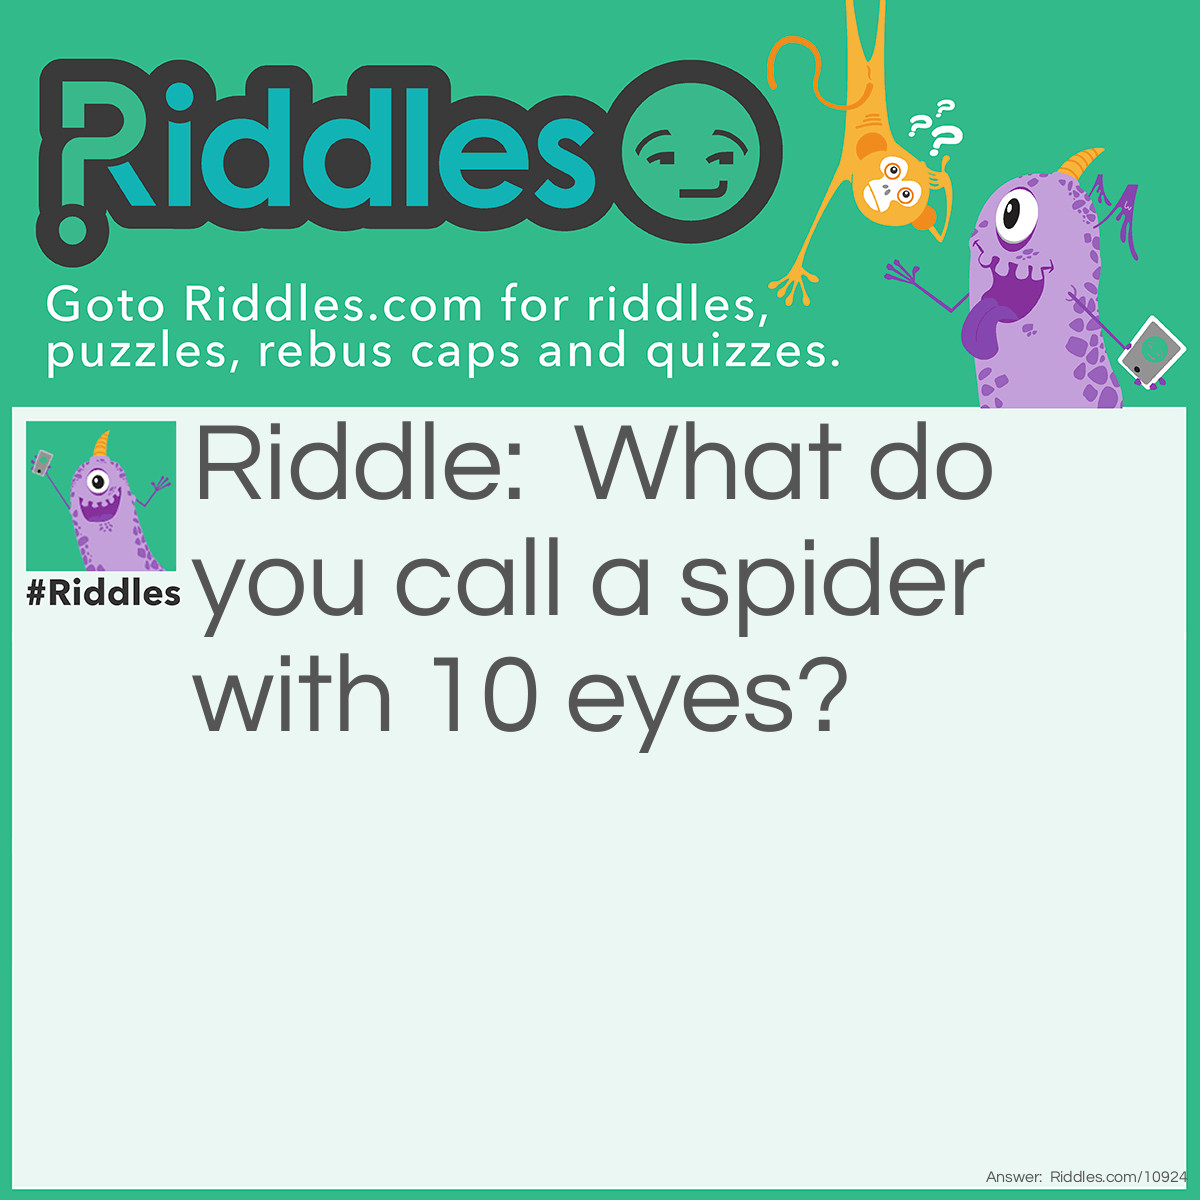 Riddle: What do you call a spider with 10 eyes? Answer: A spiiiiiiiiiider. Get it?